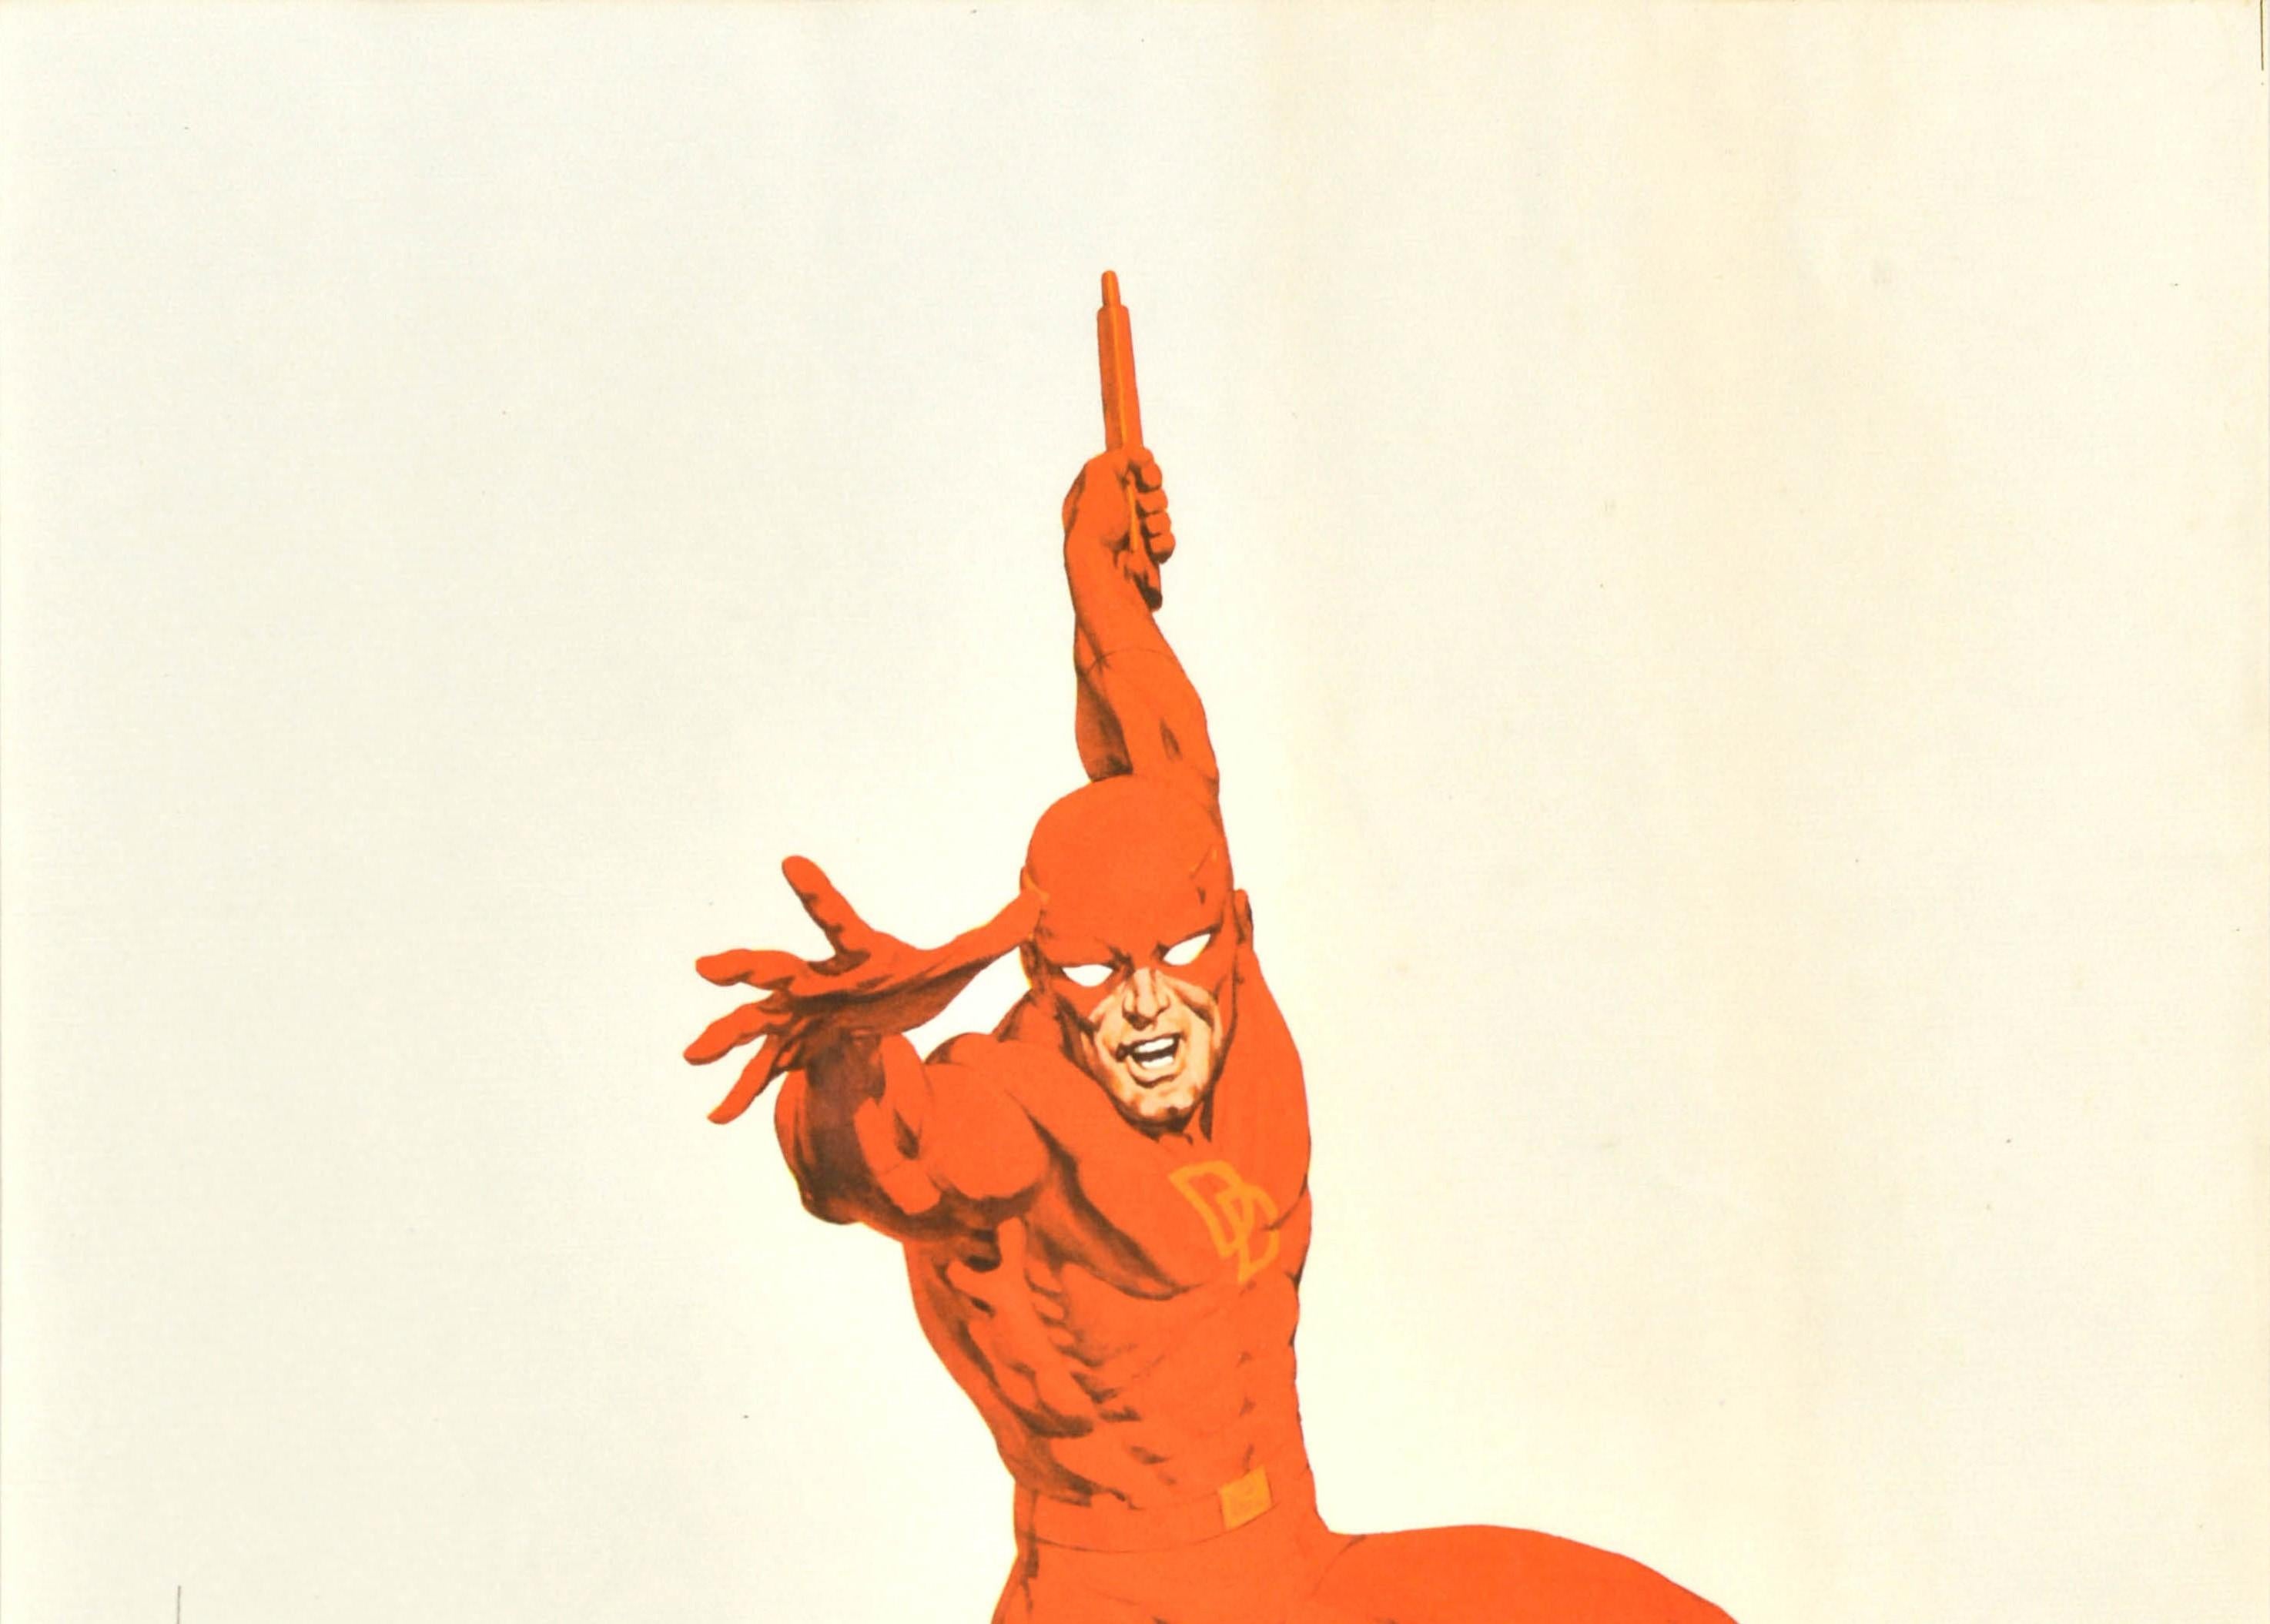 Original Vintage Marvel Film Poster Daredevil Animated Comic Superhero Movie Art - Print by Lopez Espi